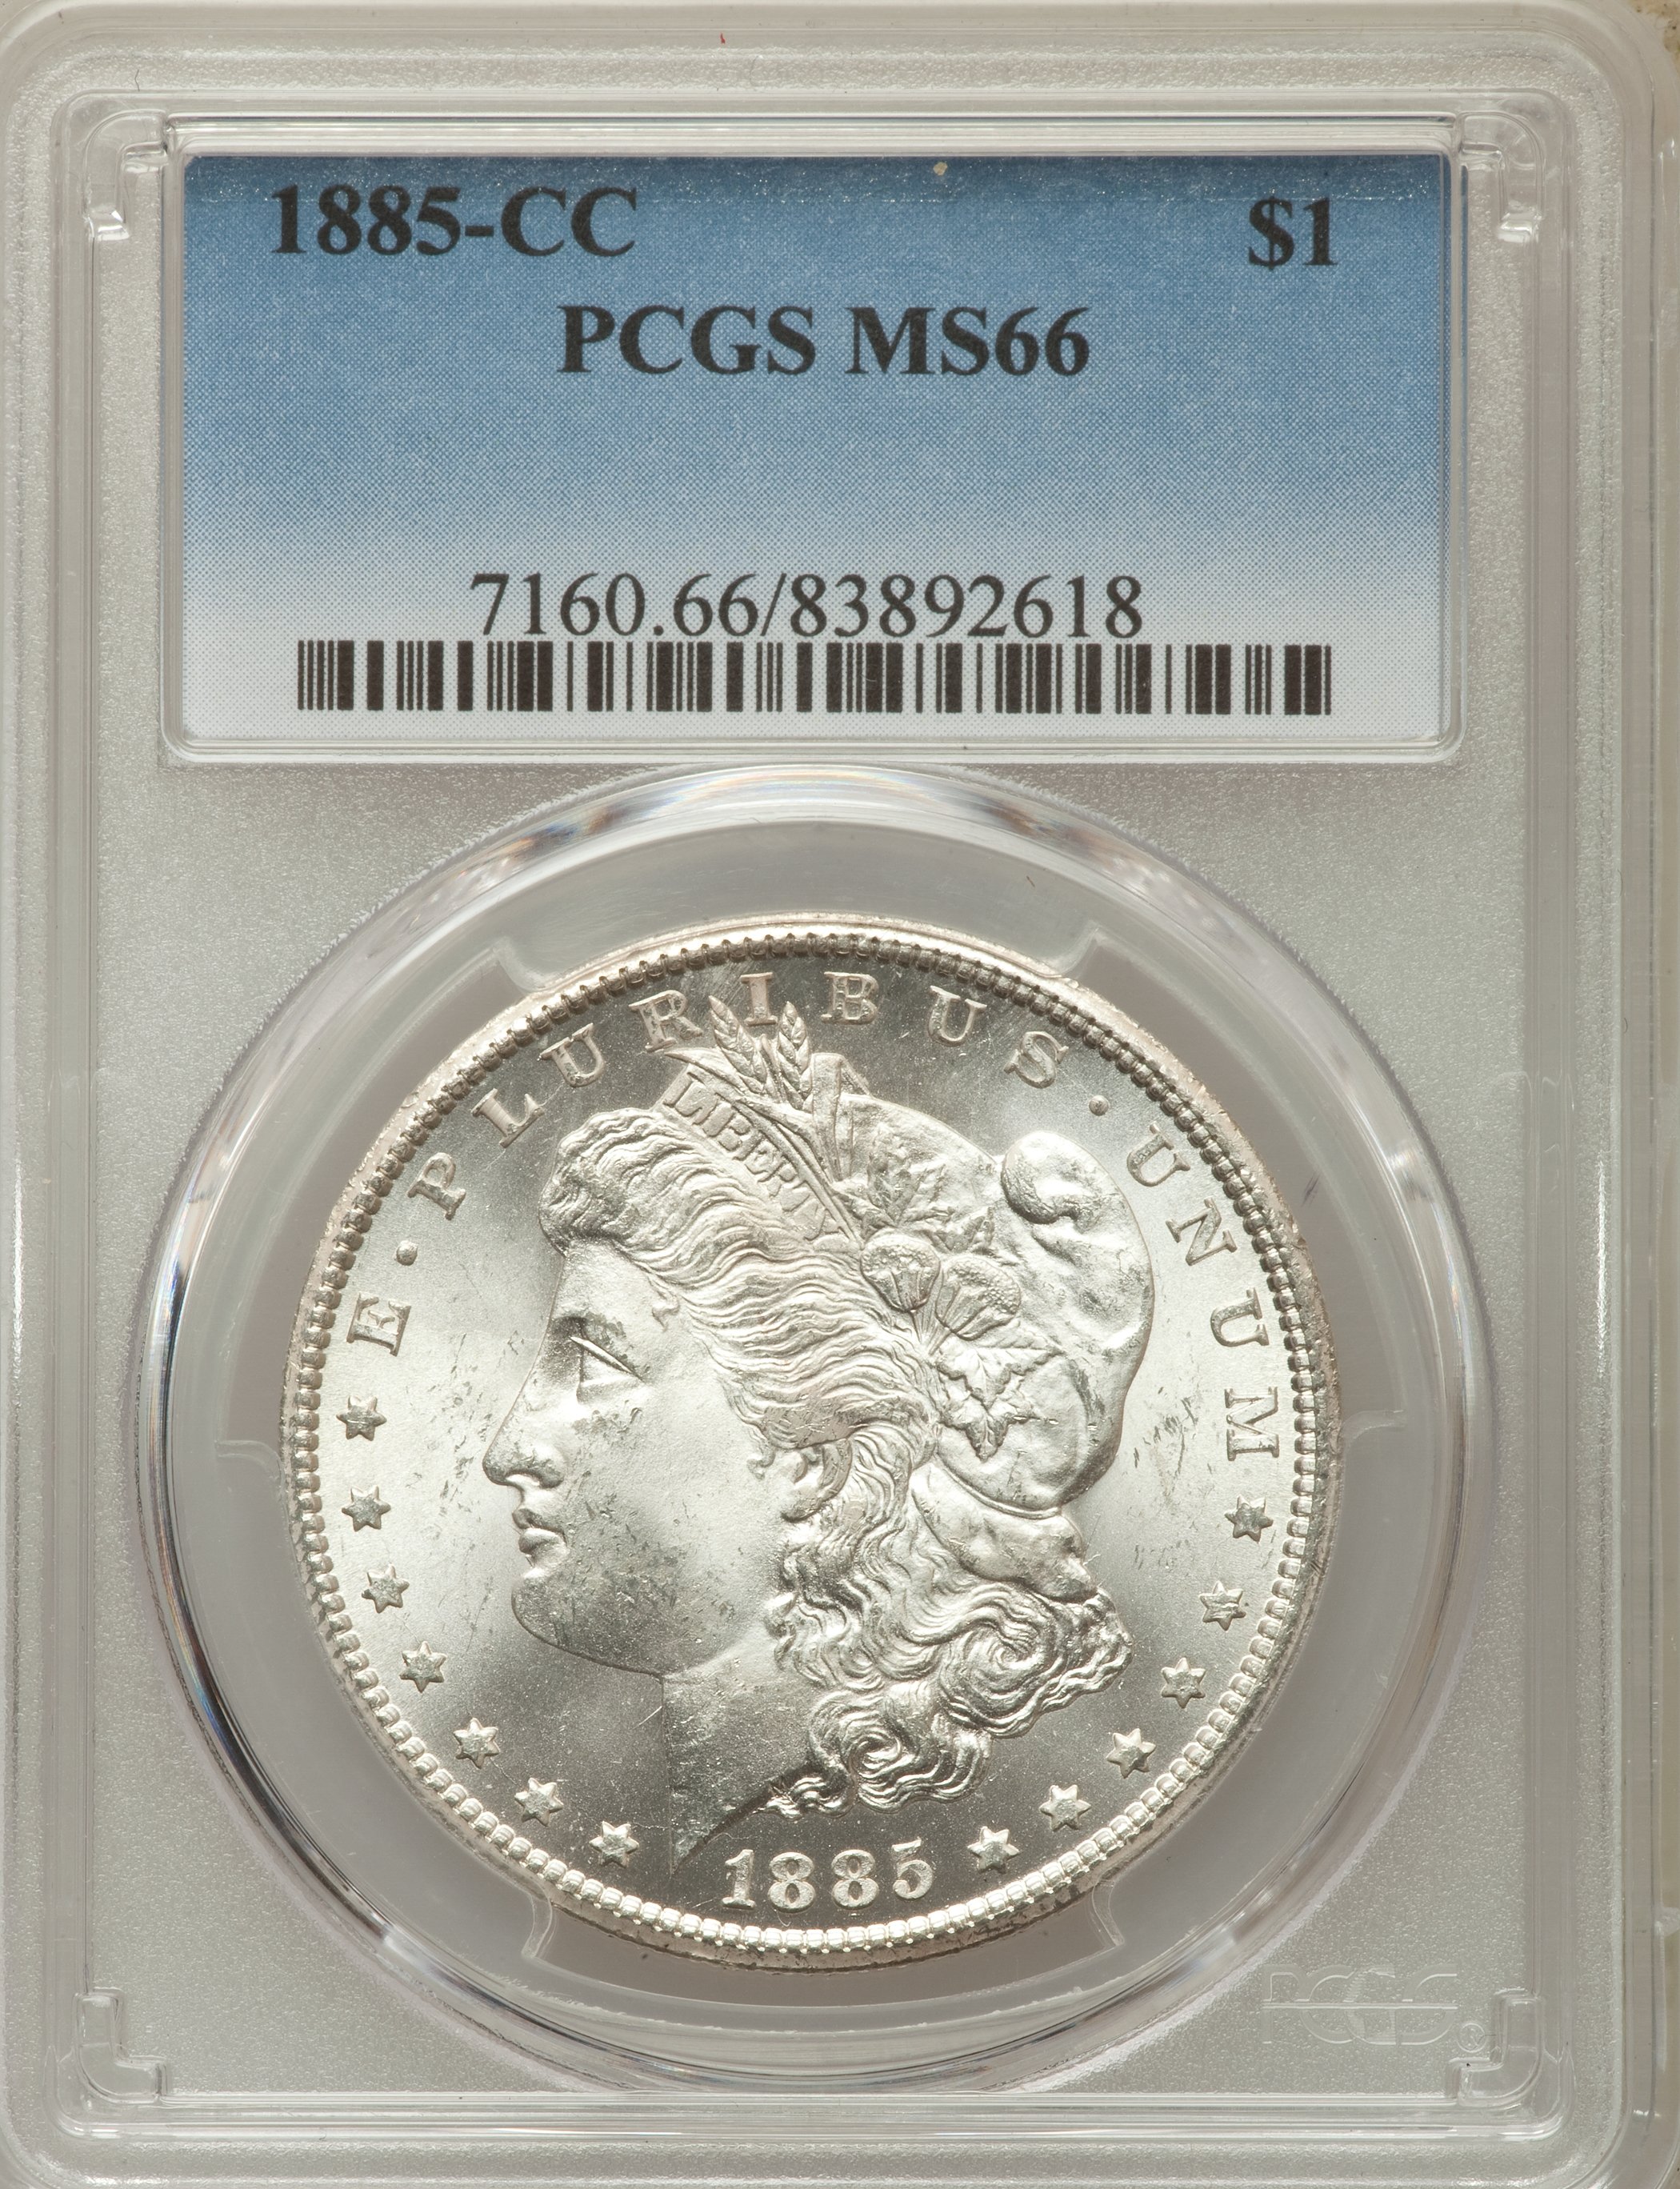 1885-CC US Morgan Silver Dollar $1 - PCGS MS66 | eBay